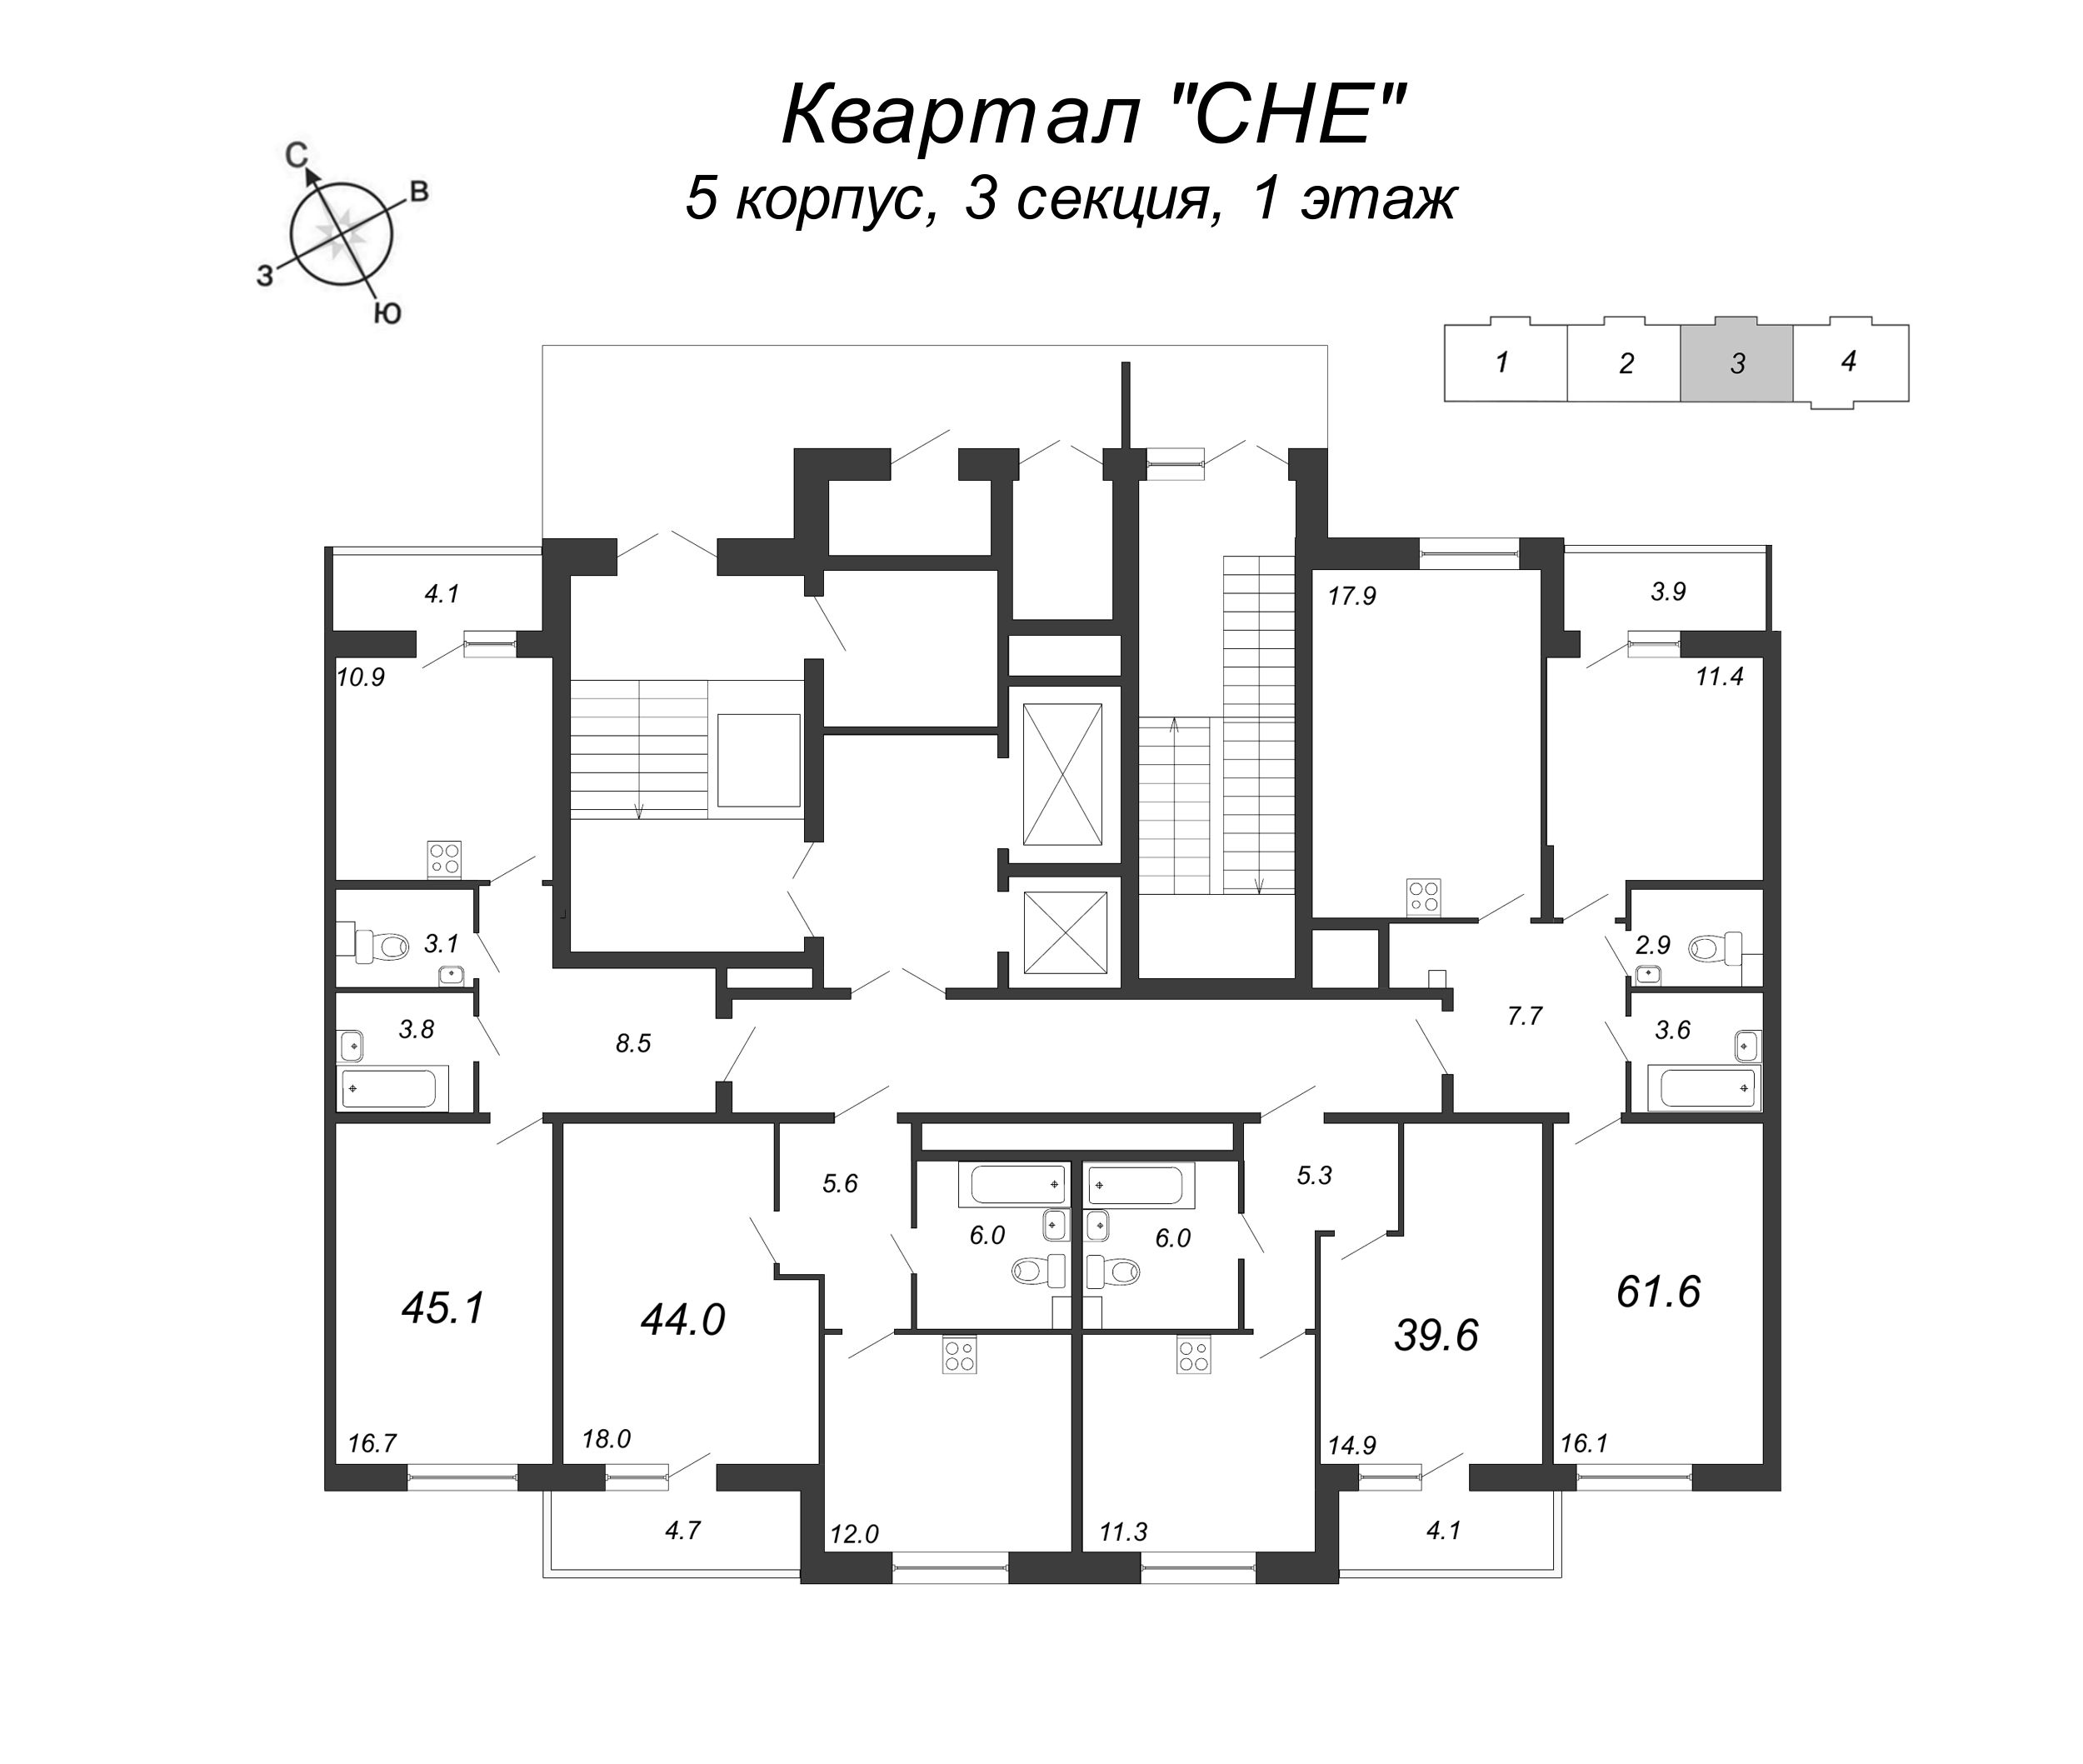 1-комнатная квартира, 44 м² в ЖК "Квартал Che" - планировка этажа